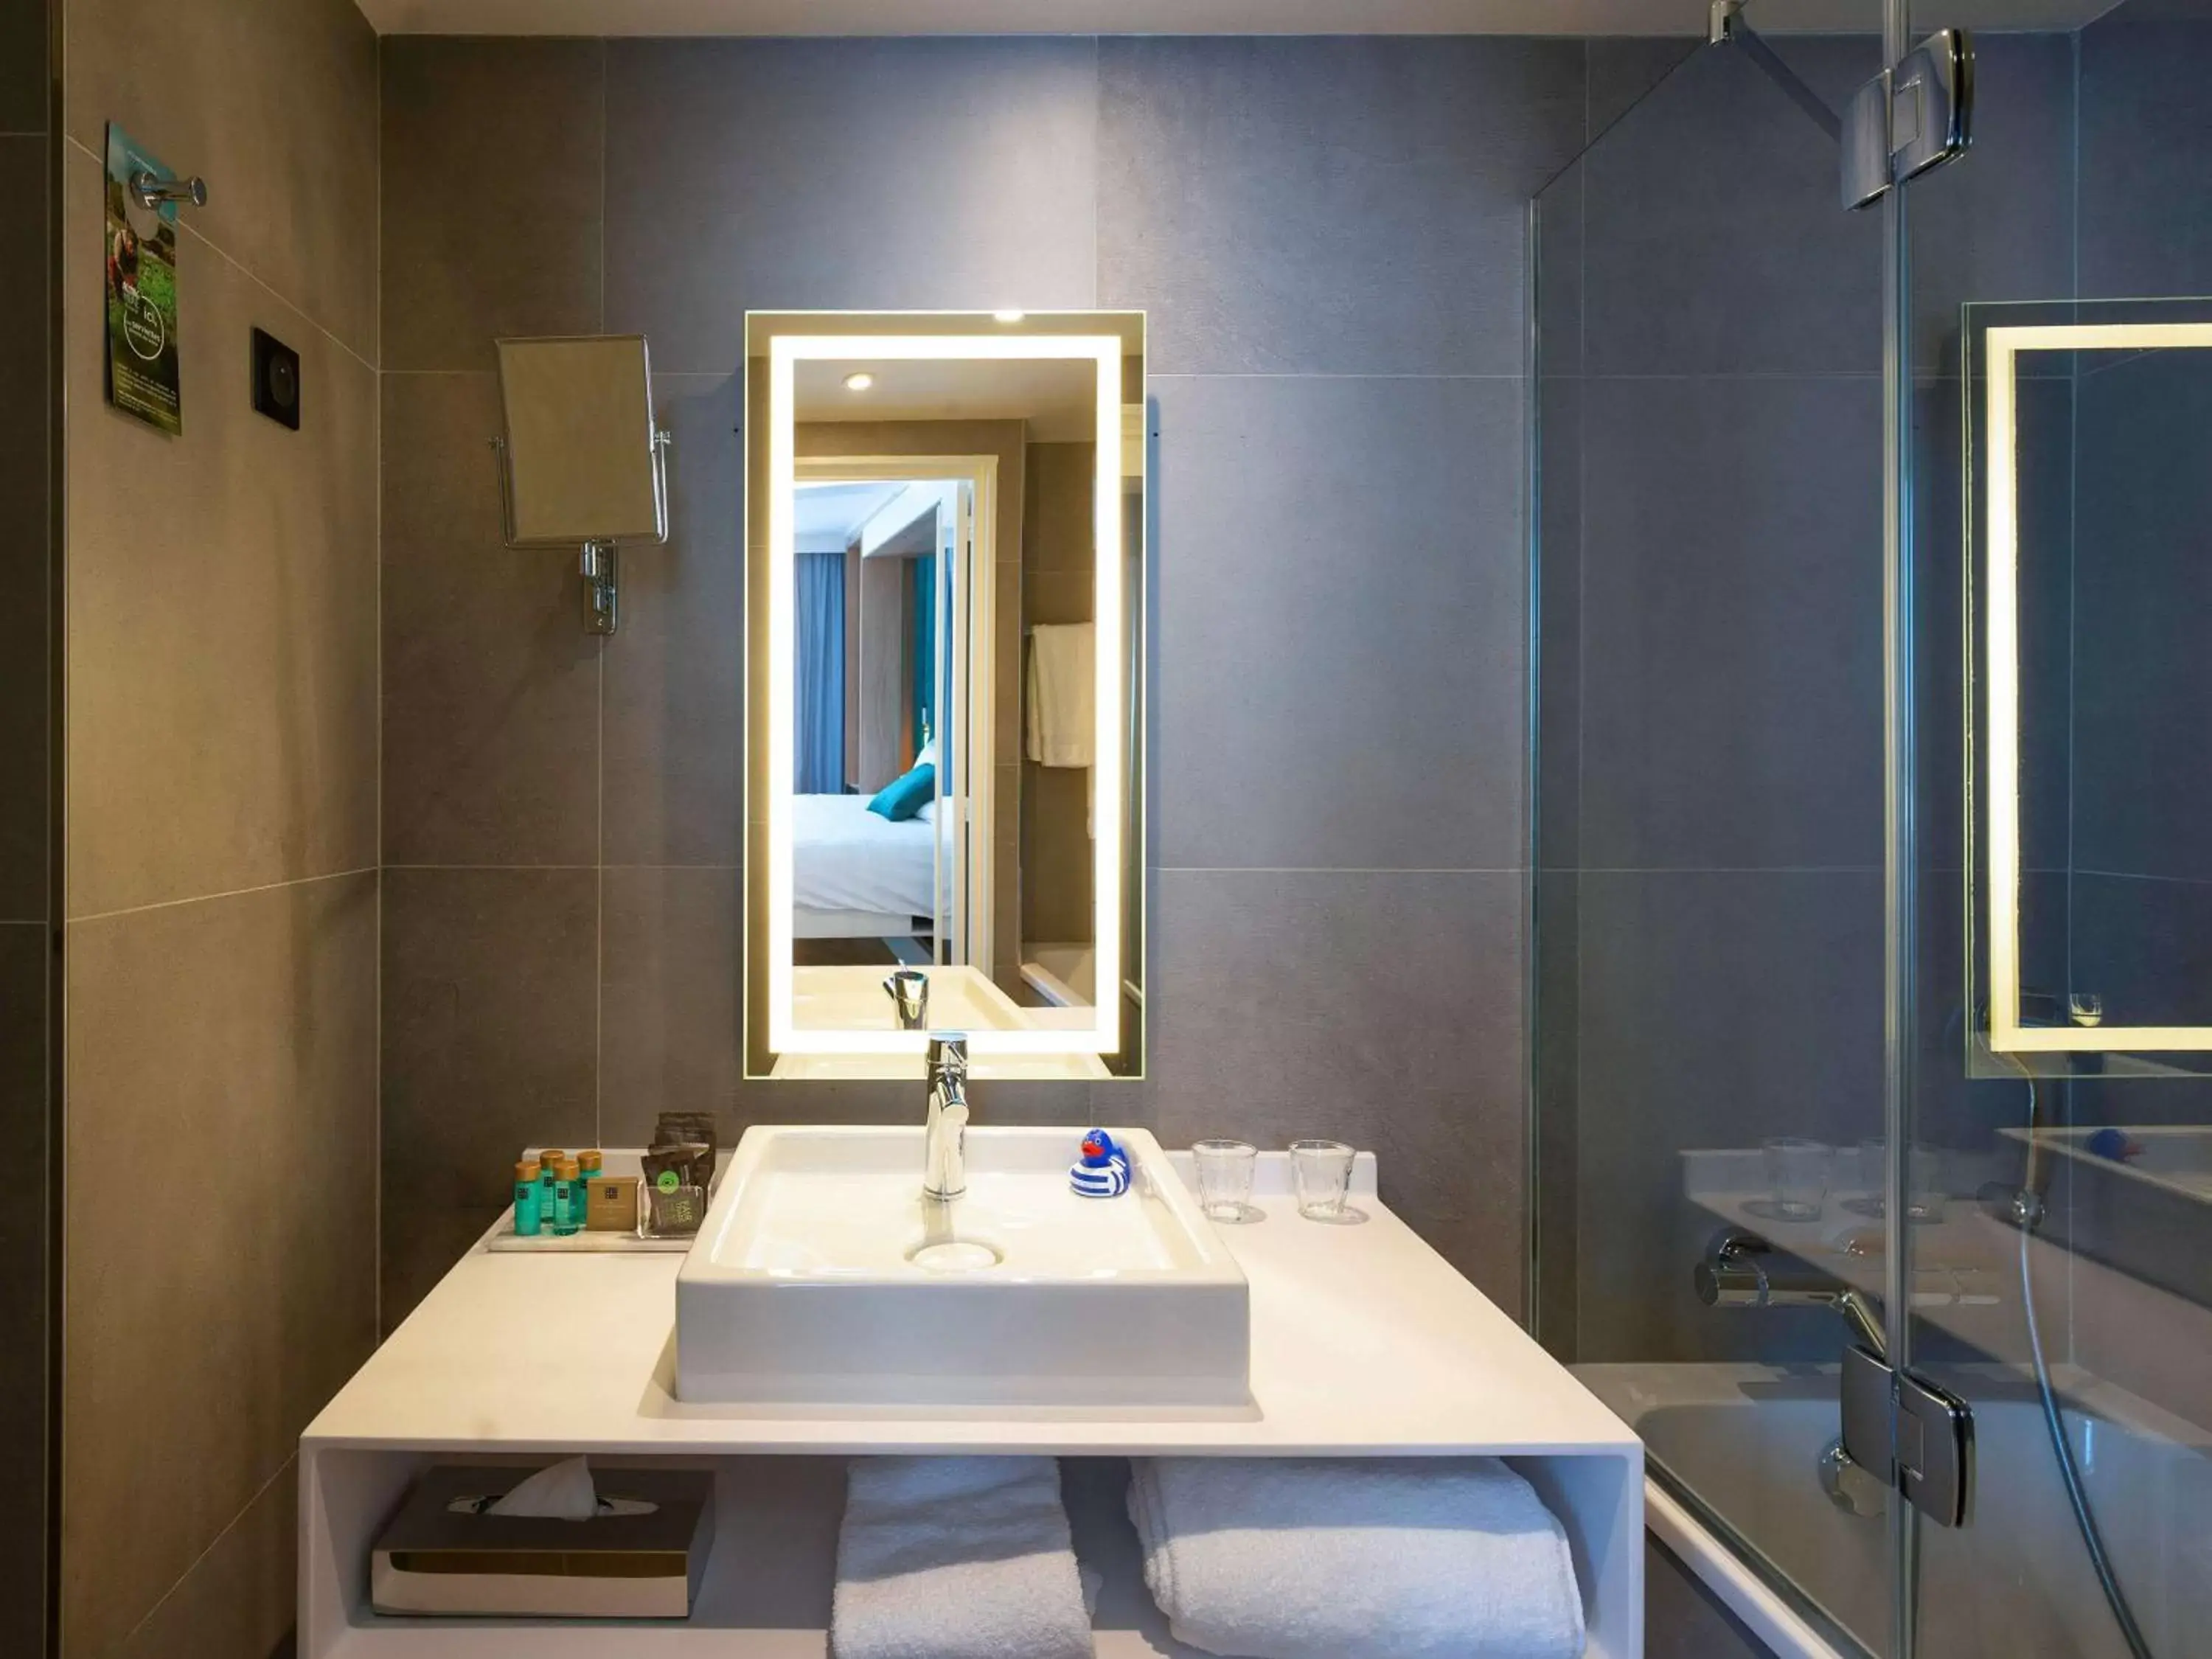 Photo of the whole room, Bathroom in Novotel Paris Centre Gare Montparnasse